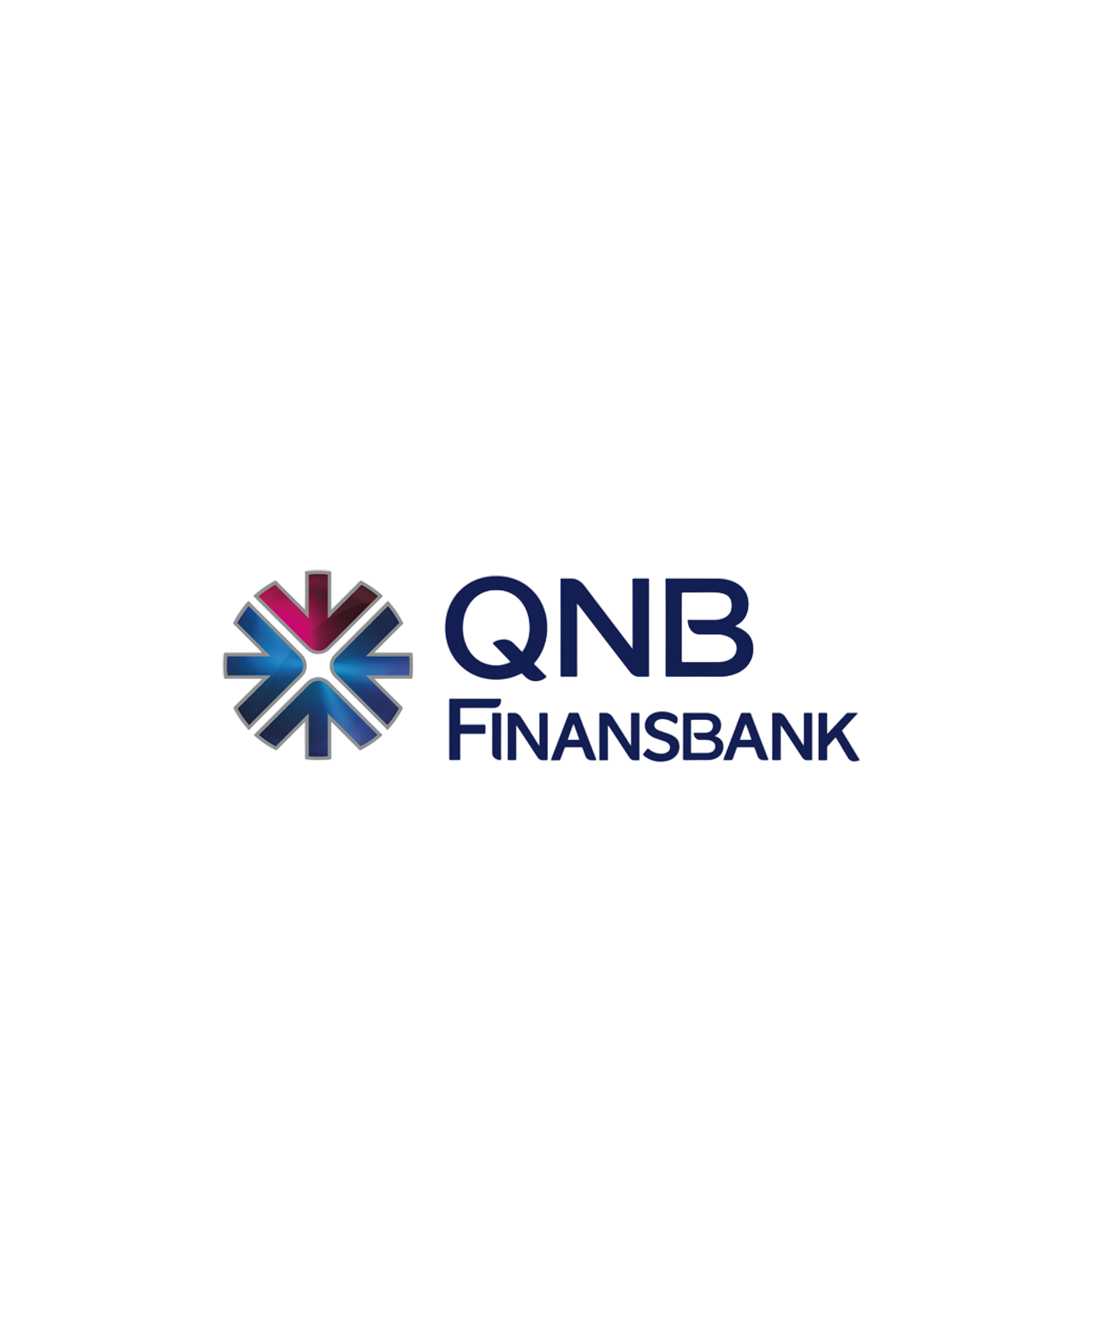 qnb_finansbank